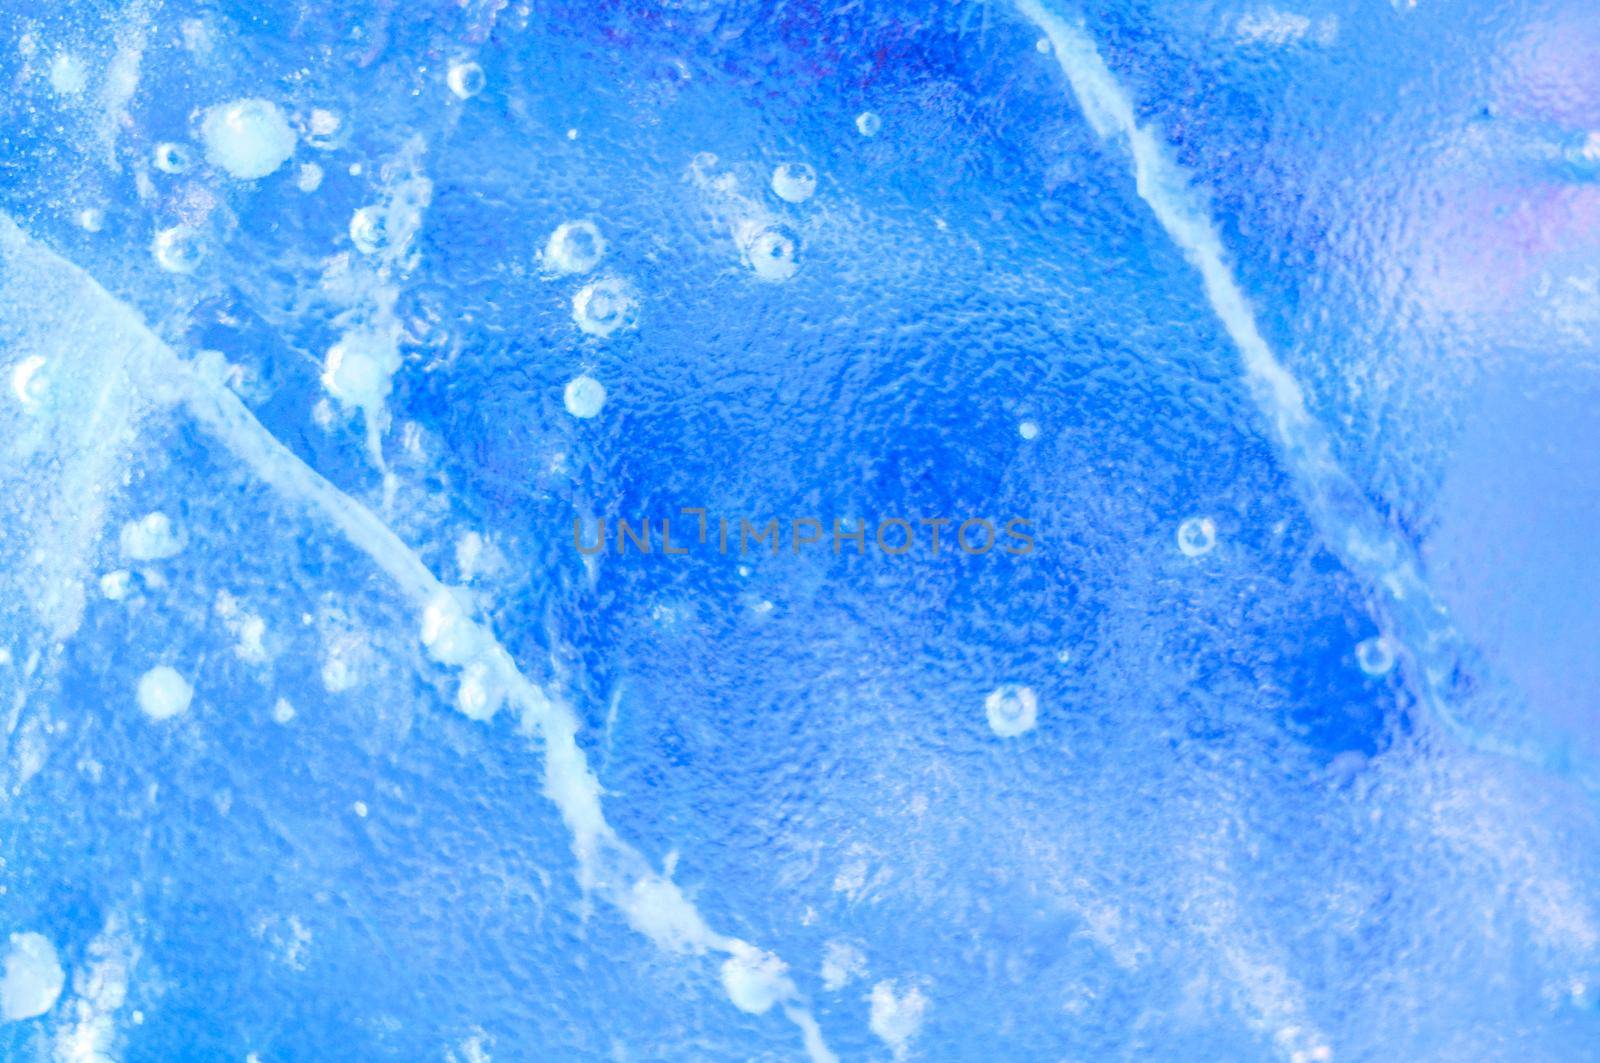 ice texture illuminated from within by Hitachin